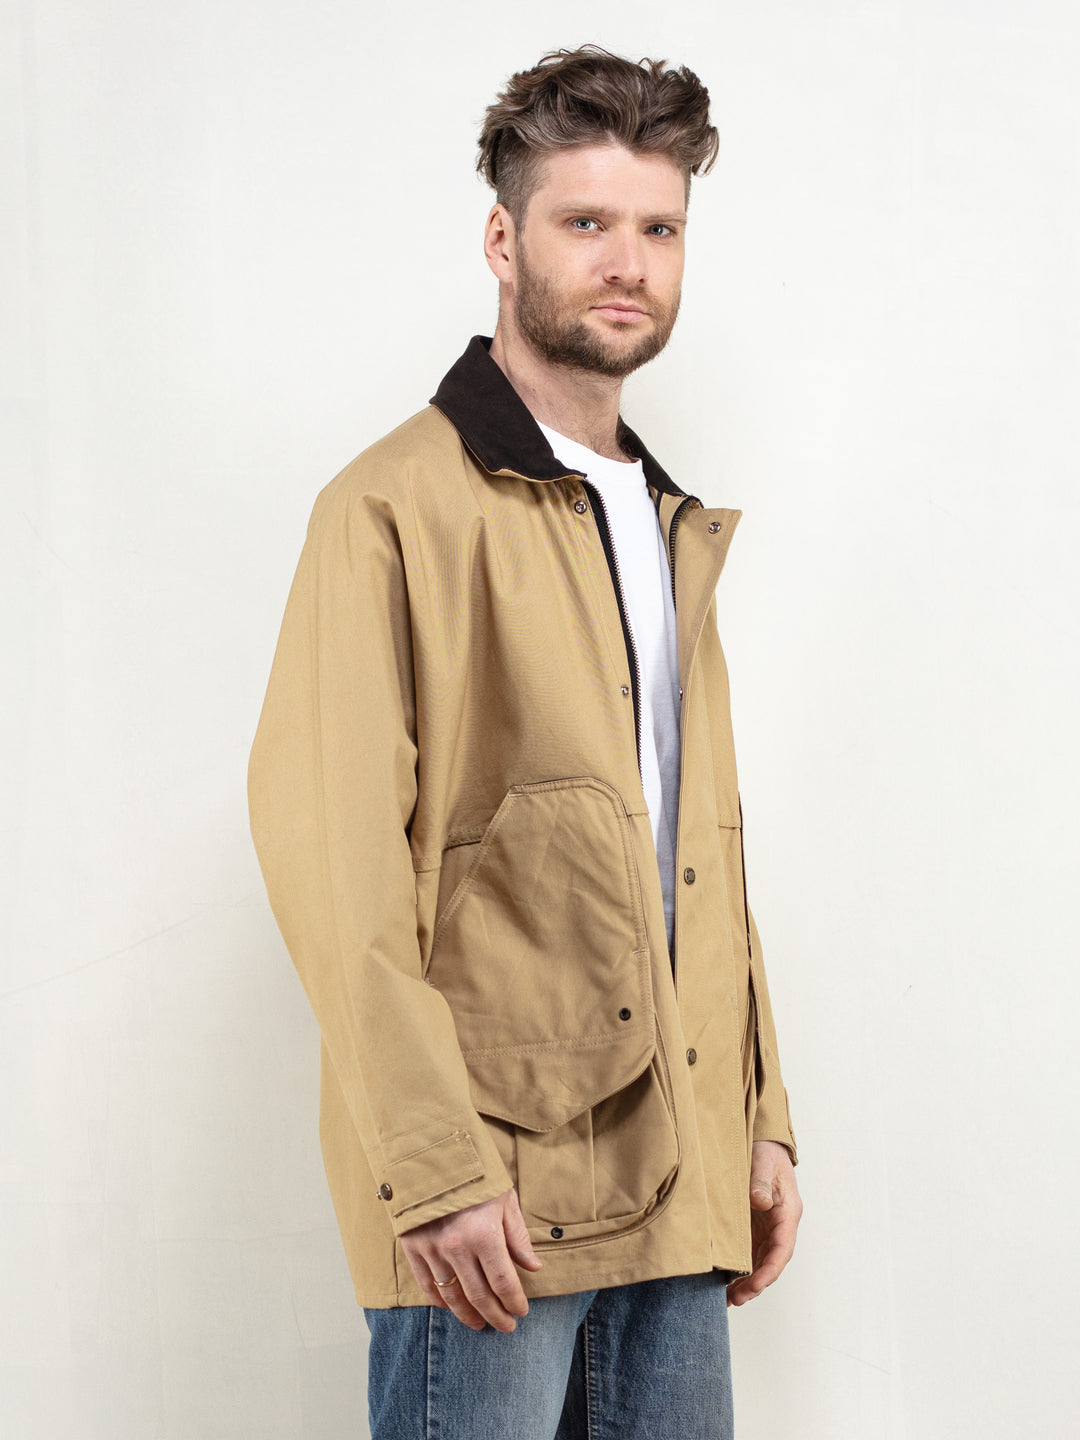 Filson Hunting Jacket made in USA field jacket beige shooting jacket style 760N Filson cotton canvas raglan sleeves coat size large